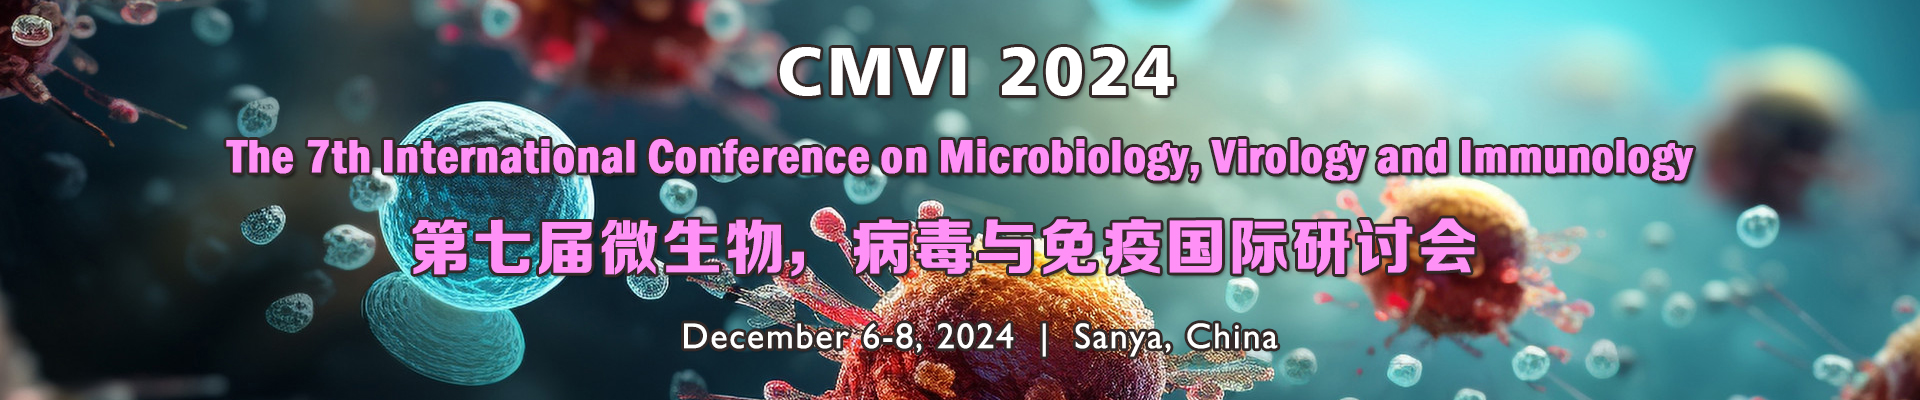 The 7th International Conference on Microbiology, Virology and Immunology (CMVI 2024), Sanya, Hainan, China